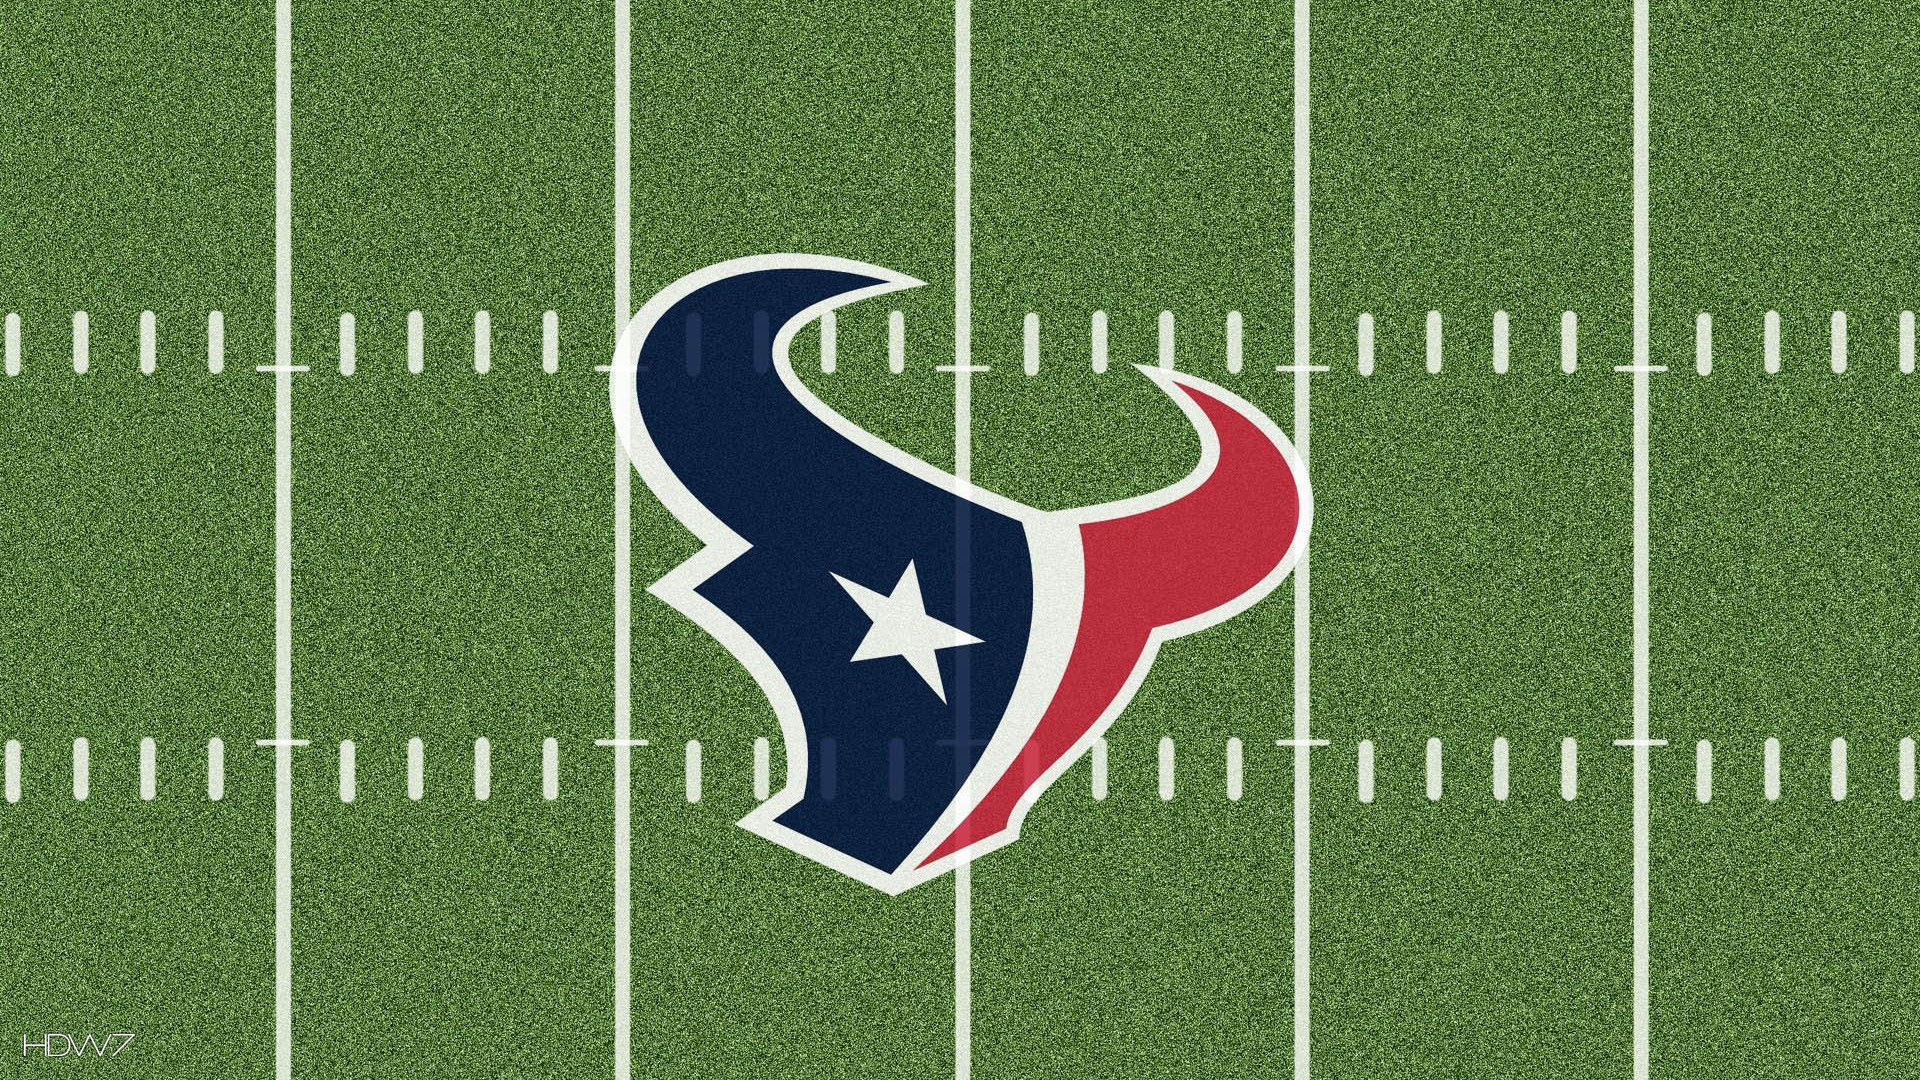 Wallpaper Name Houston Texans Logo Nfl Field Jpg Added May